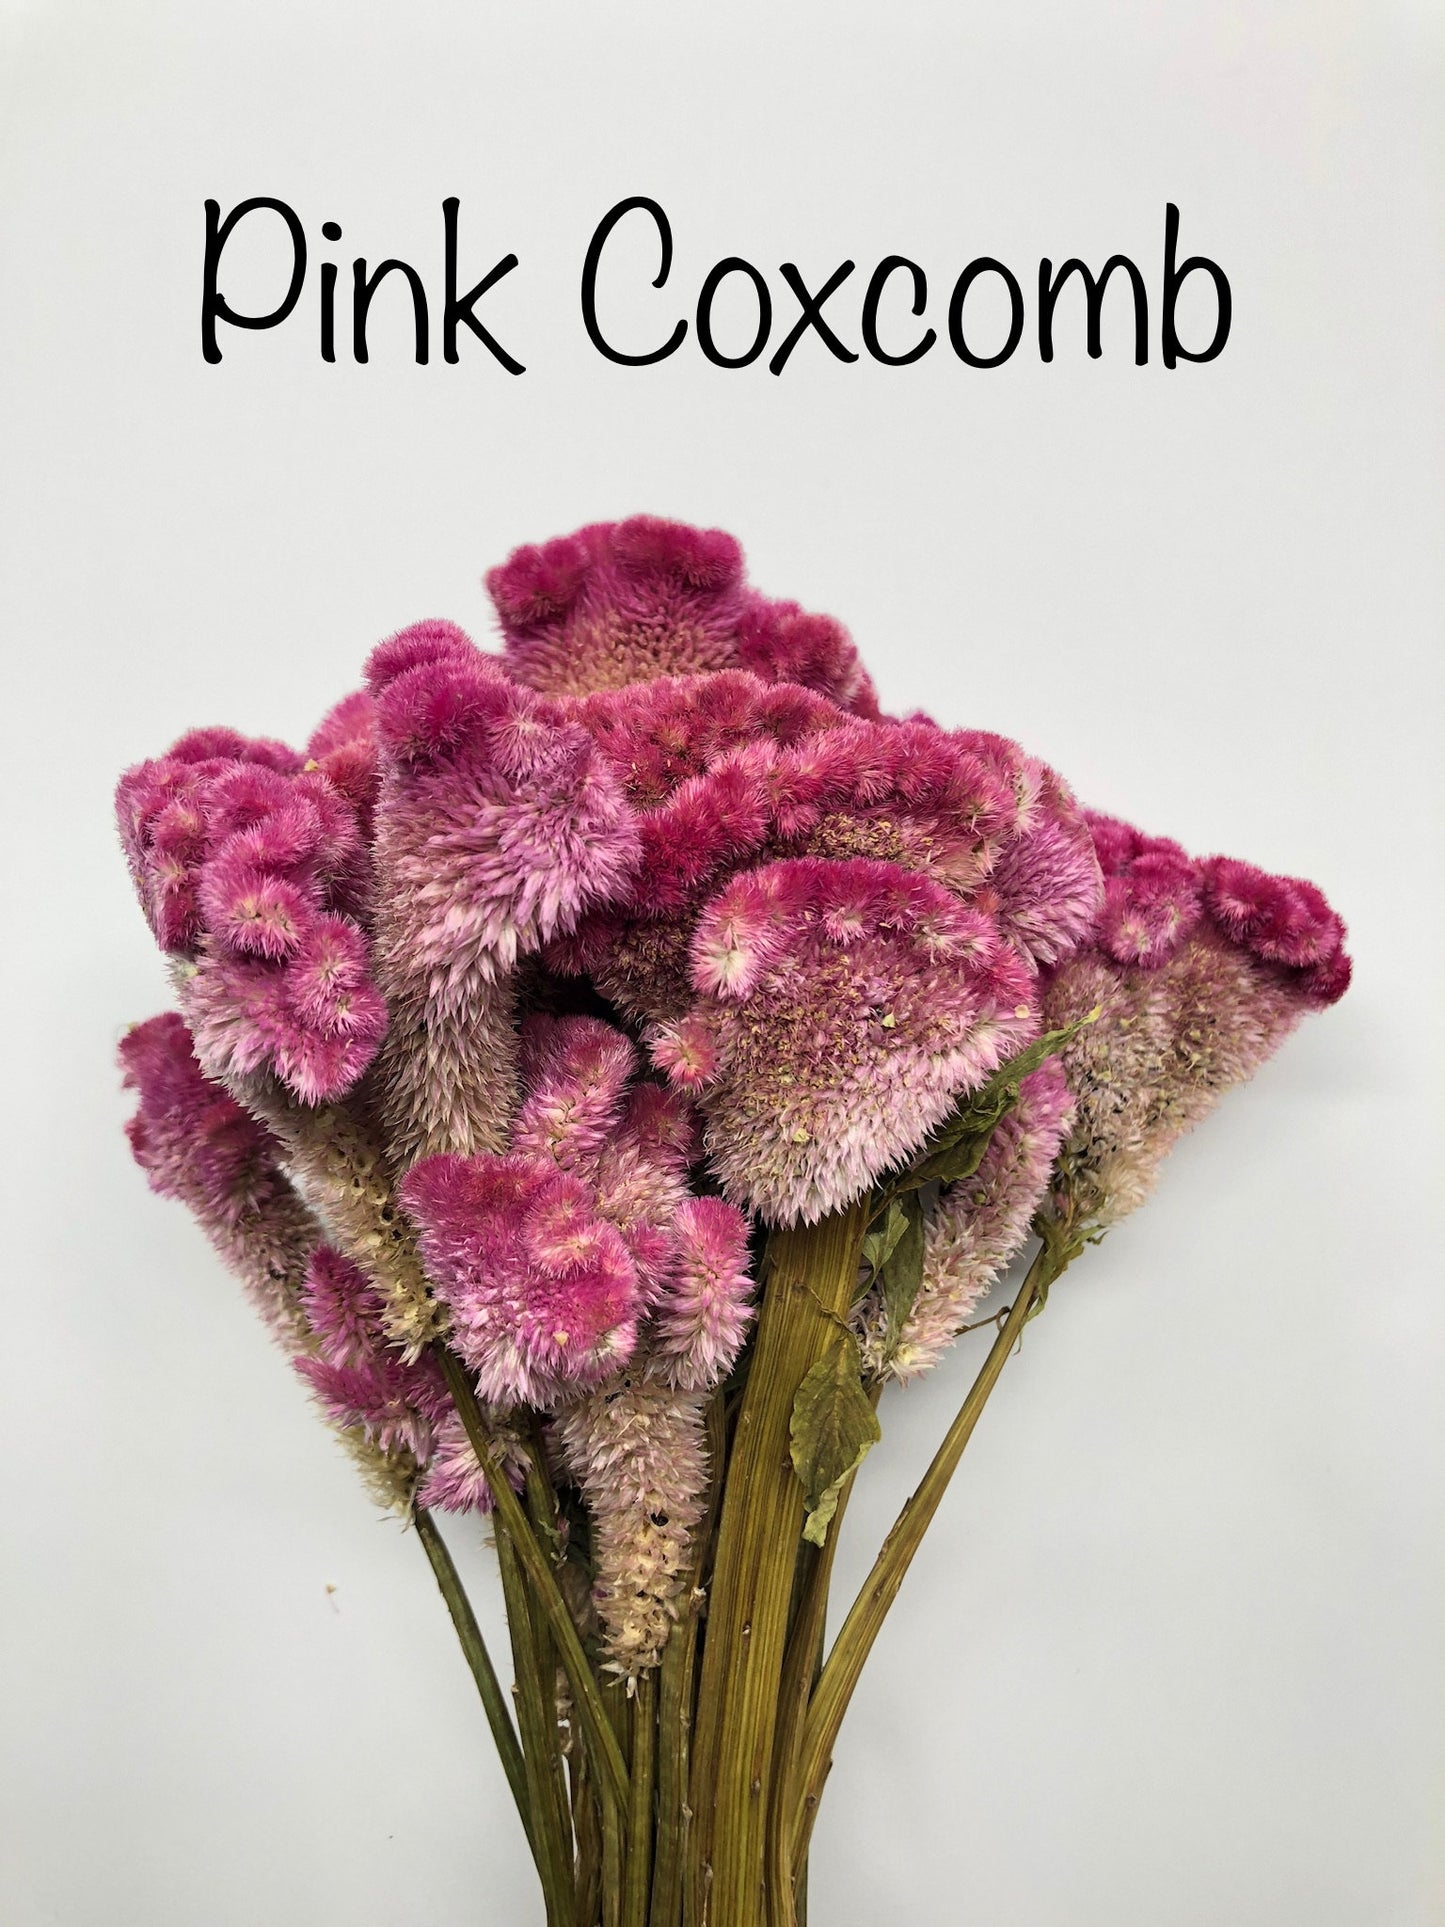 Coxcomb, Celosia, Merlot, Pink, Cockscomb, Dried, Dried Floral, Dry Flowers, Burgundy Celosia, Home Decor, Wedding, Bouquet, Bridesmaids,